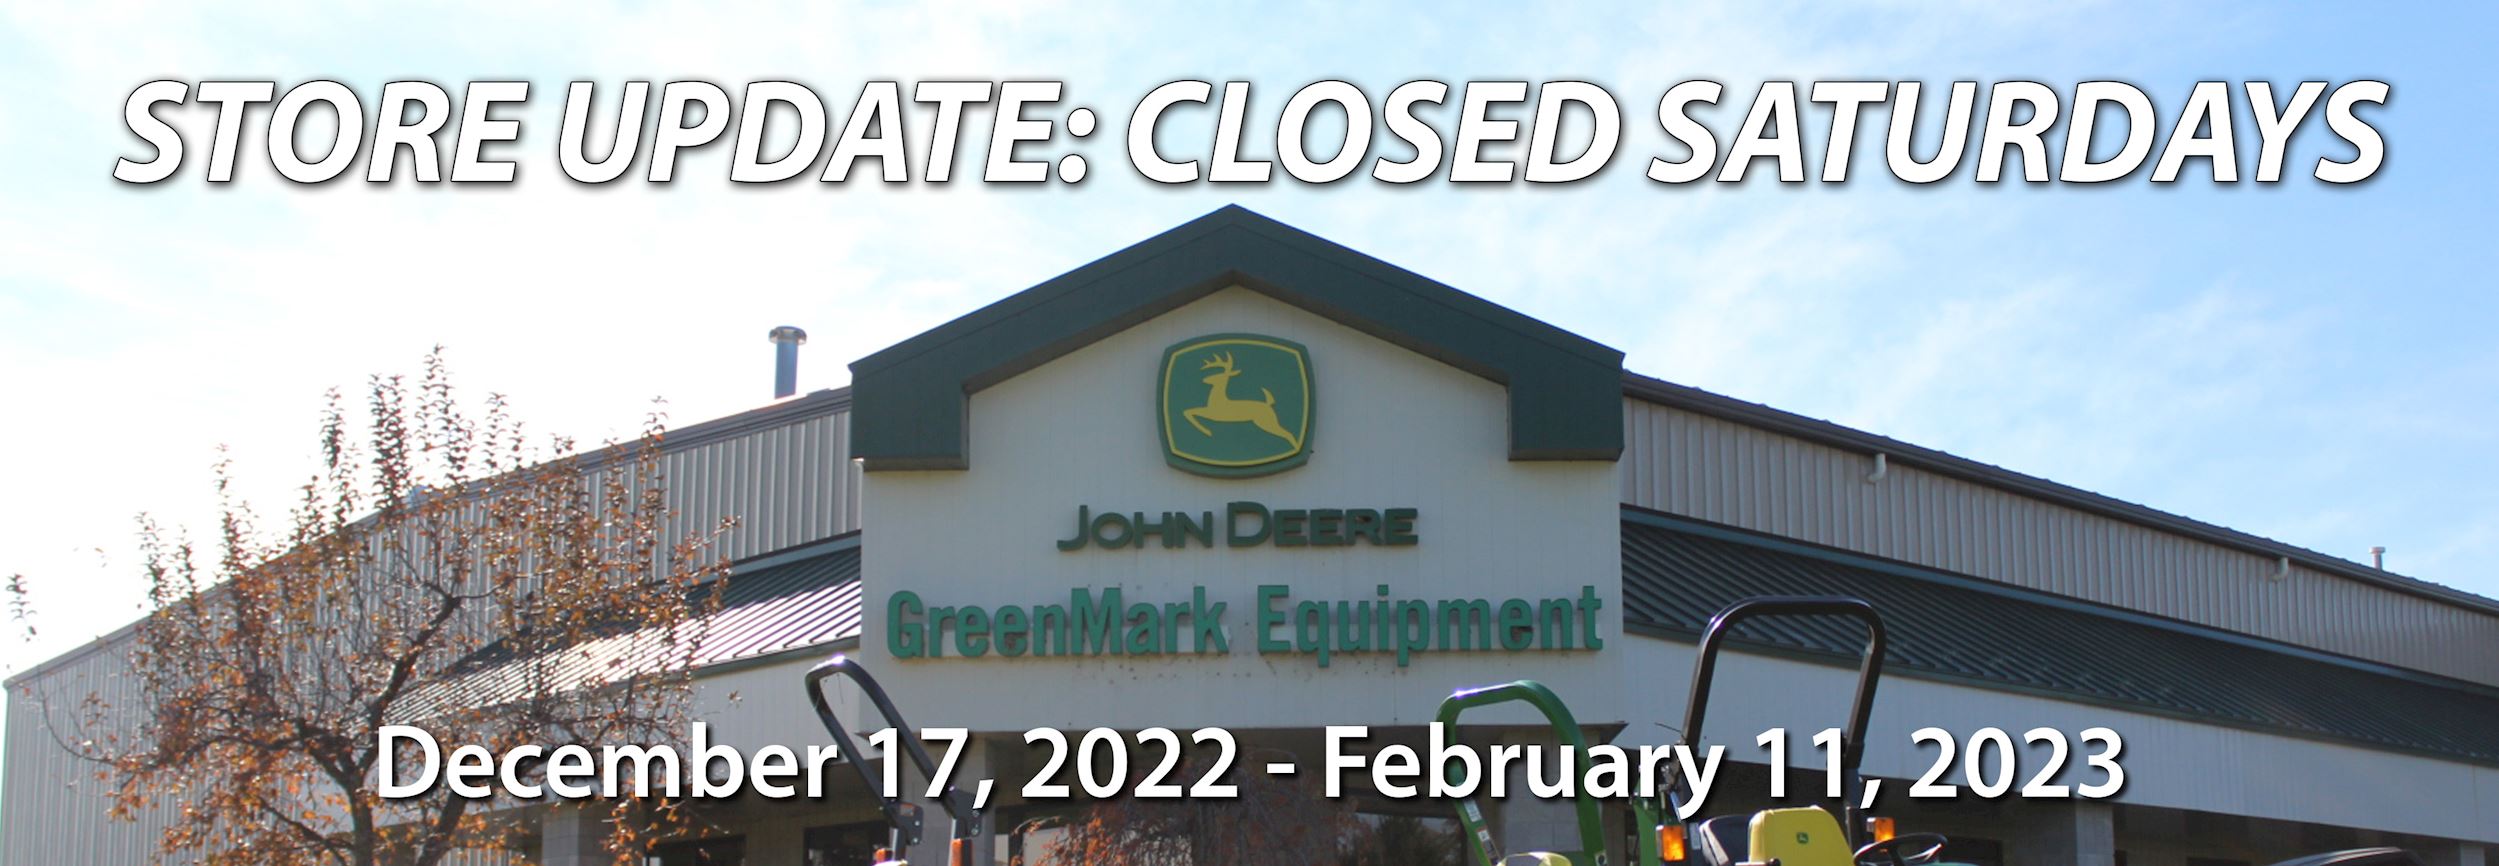 GreenMark Updated Store Hours: Closed Saturdays